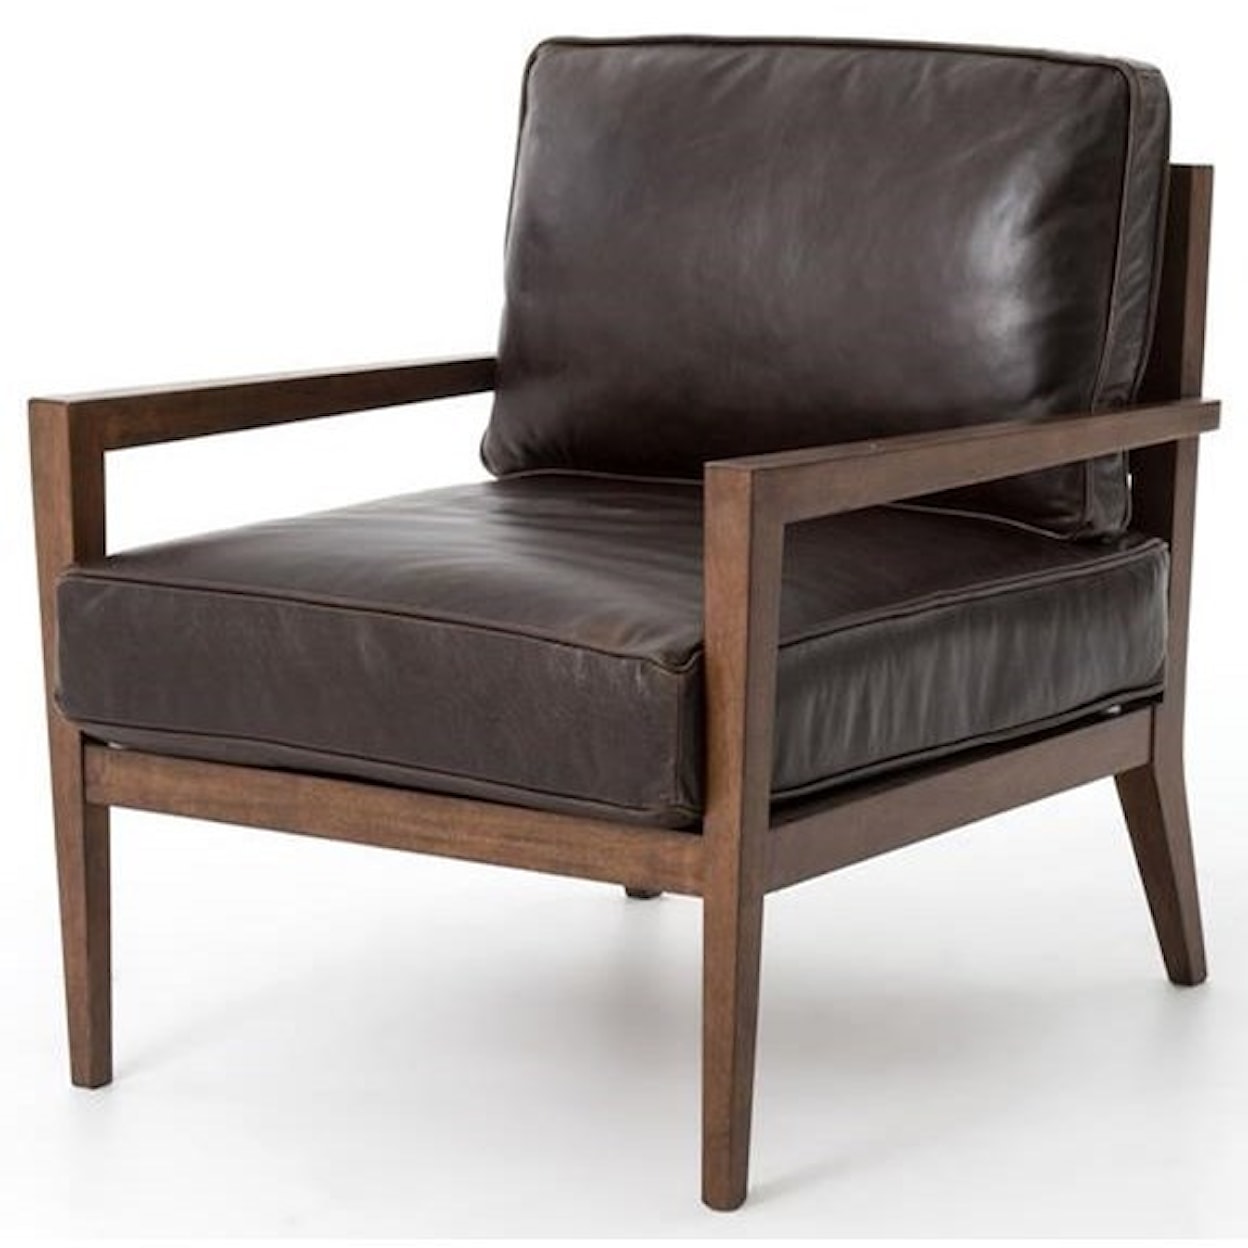 Four Hands Kensington CBBS Wood Frame Accent Chair